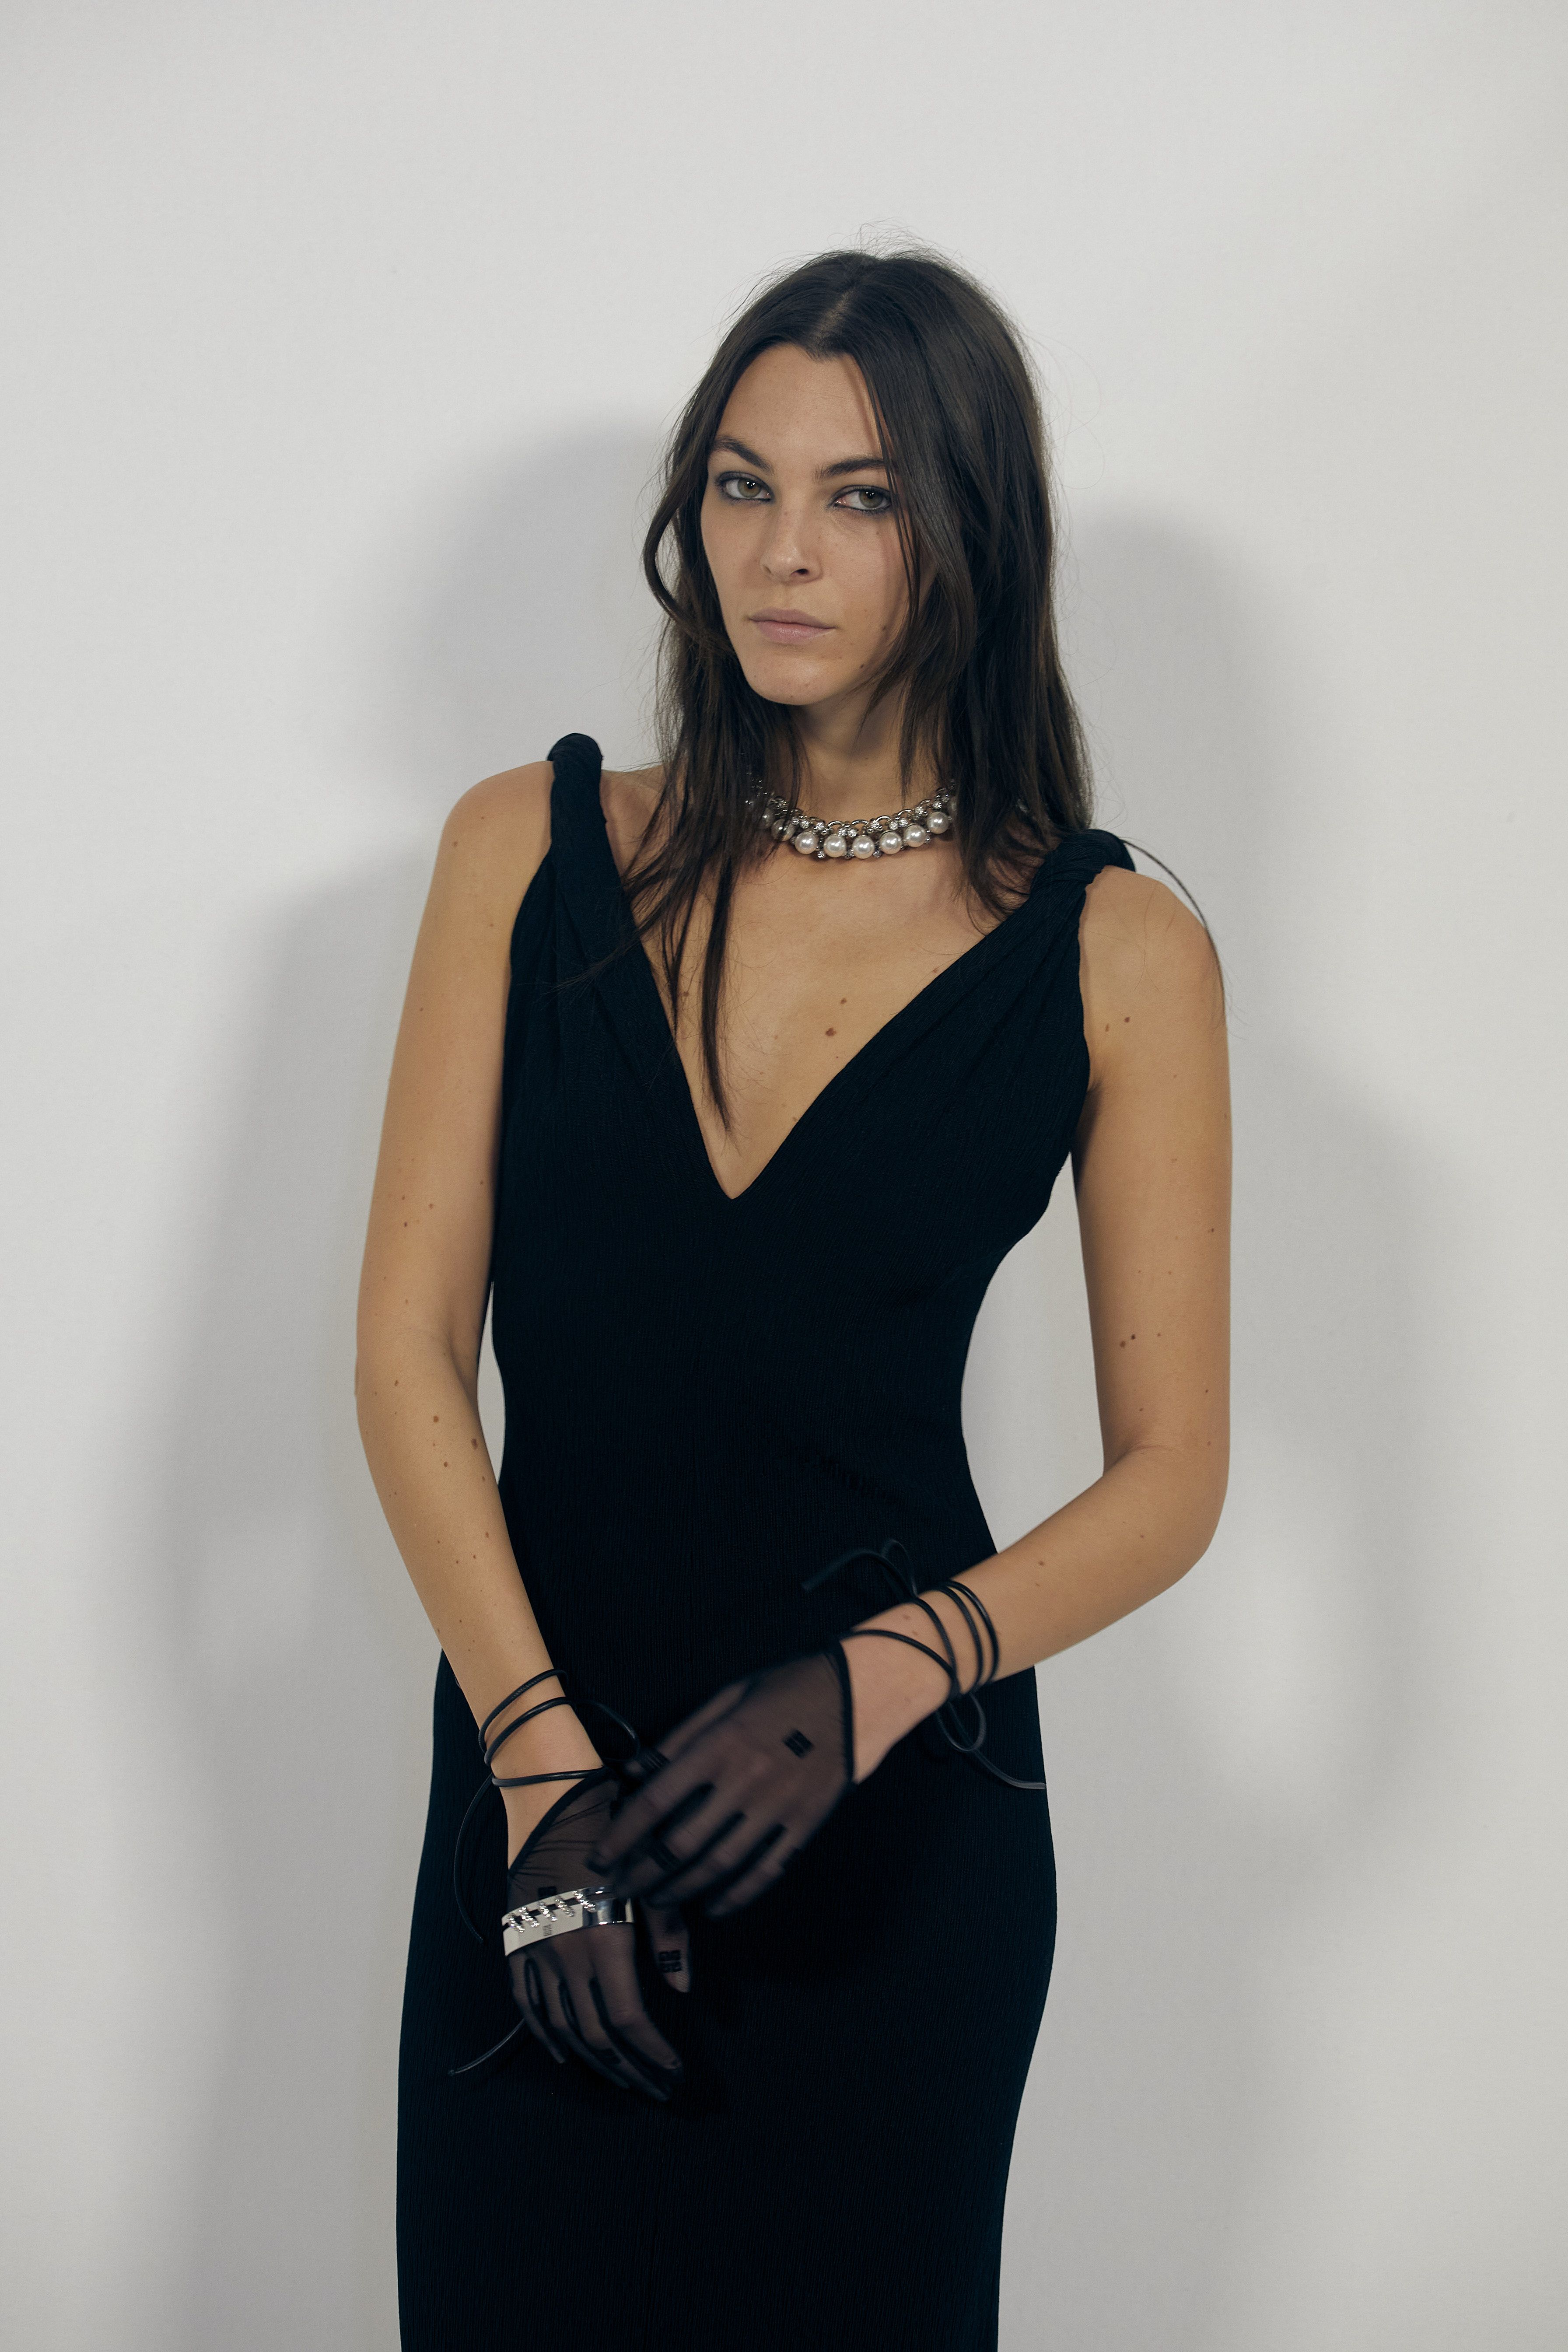 Sanya Malhotra is redefining classic chic style in elegant black dress |  TOIPhotogallery